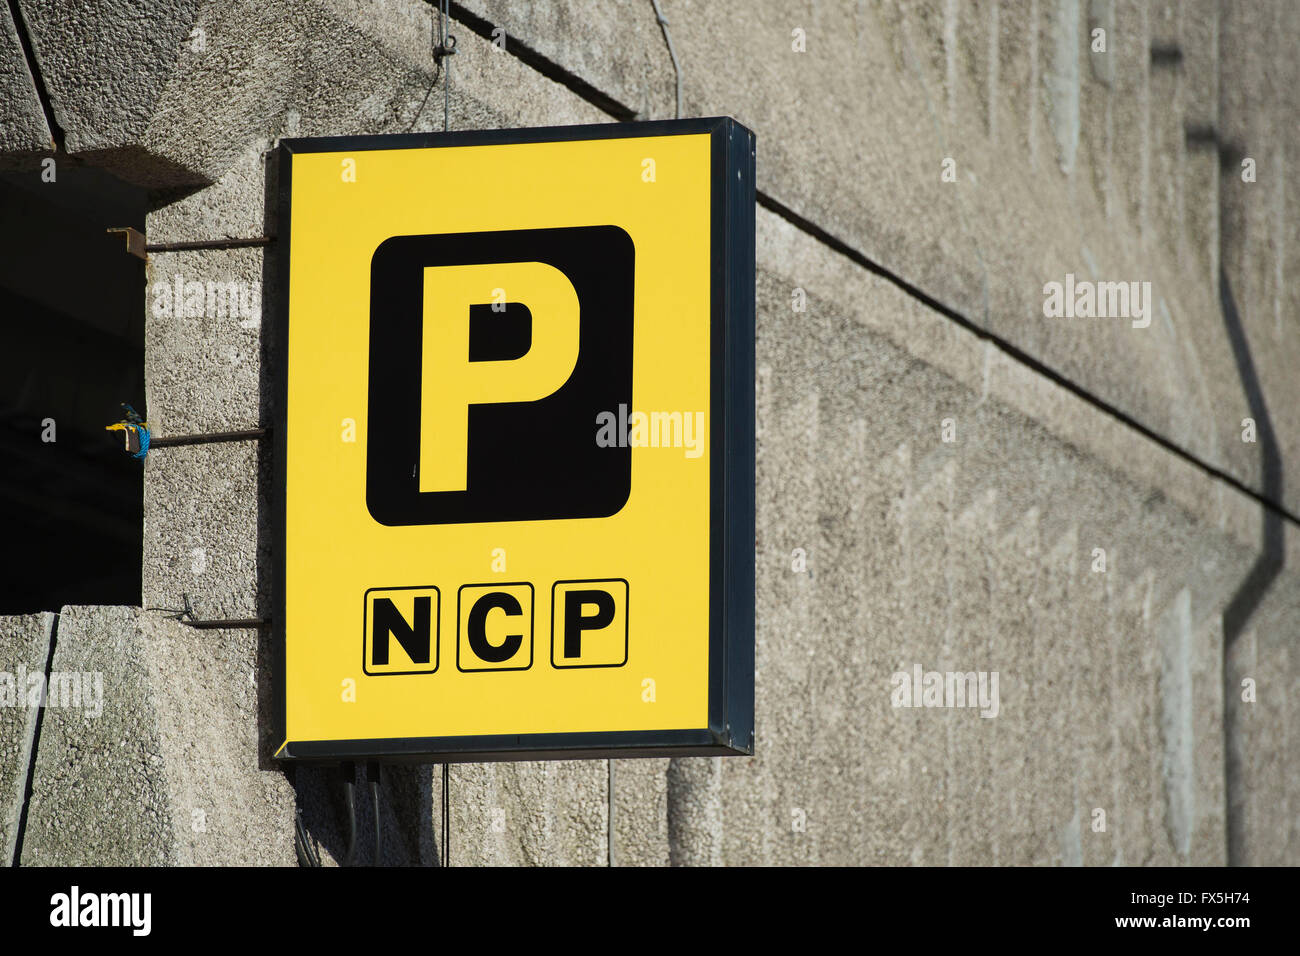 NCP car park sign logo. Stock Photo